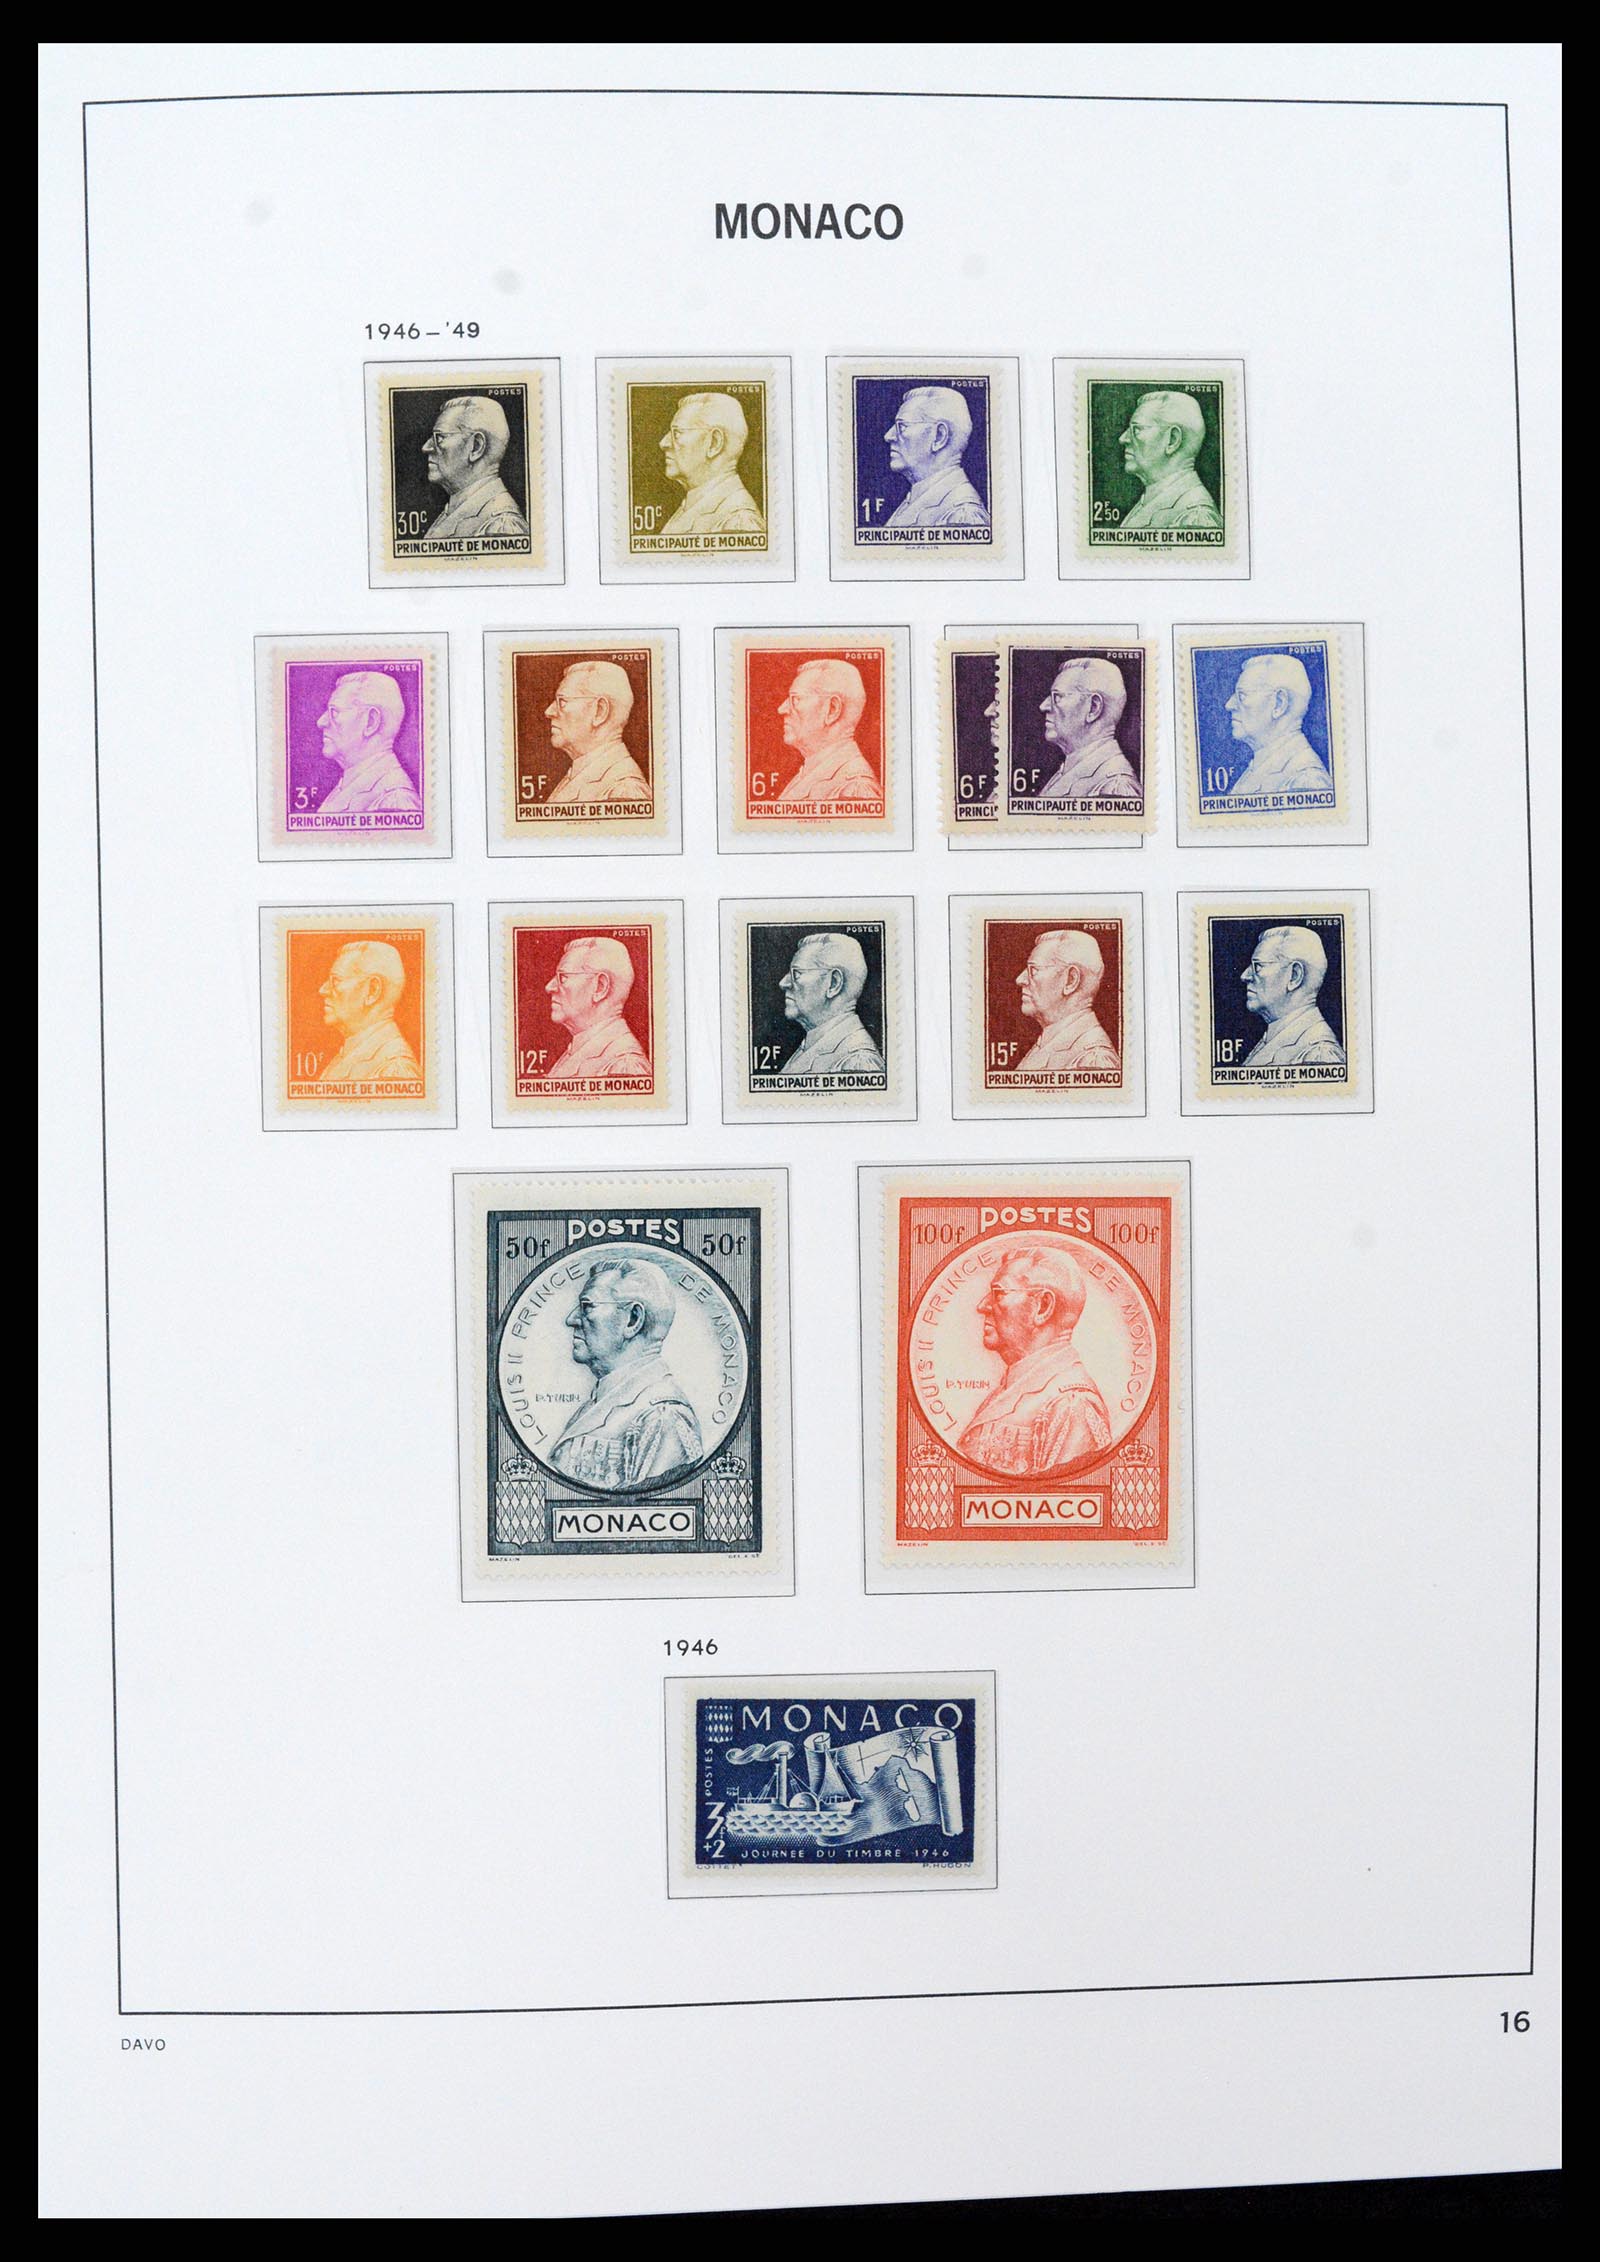 37279 016 - Stamp collection 37279 Monaco 1885-1969.